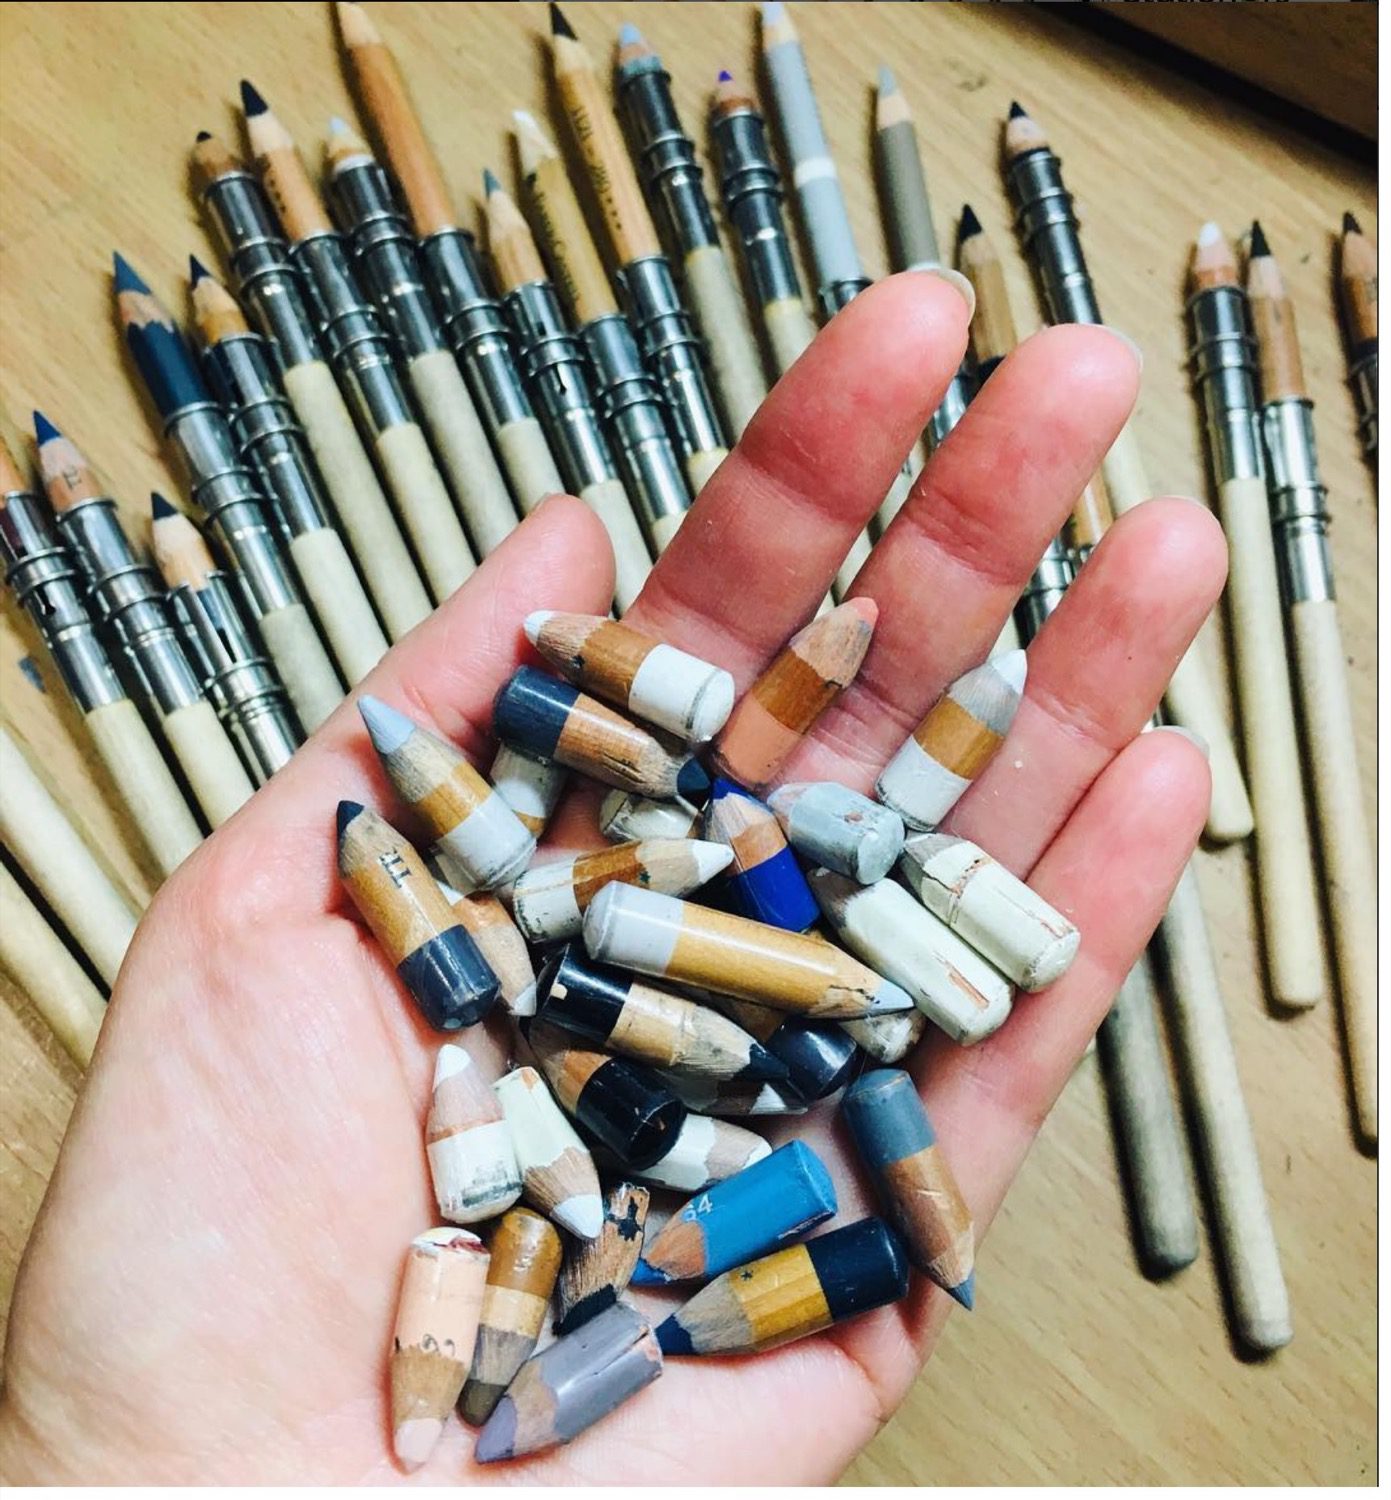 The Best Pencil Extenders to Make Wooden Pencils Last Longer